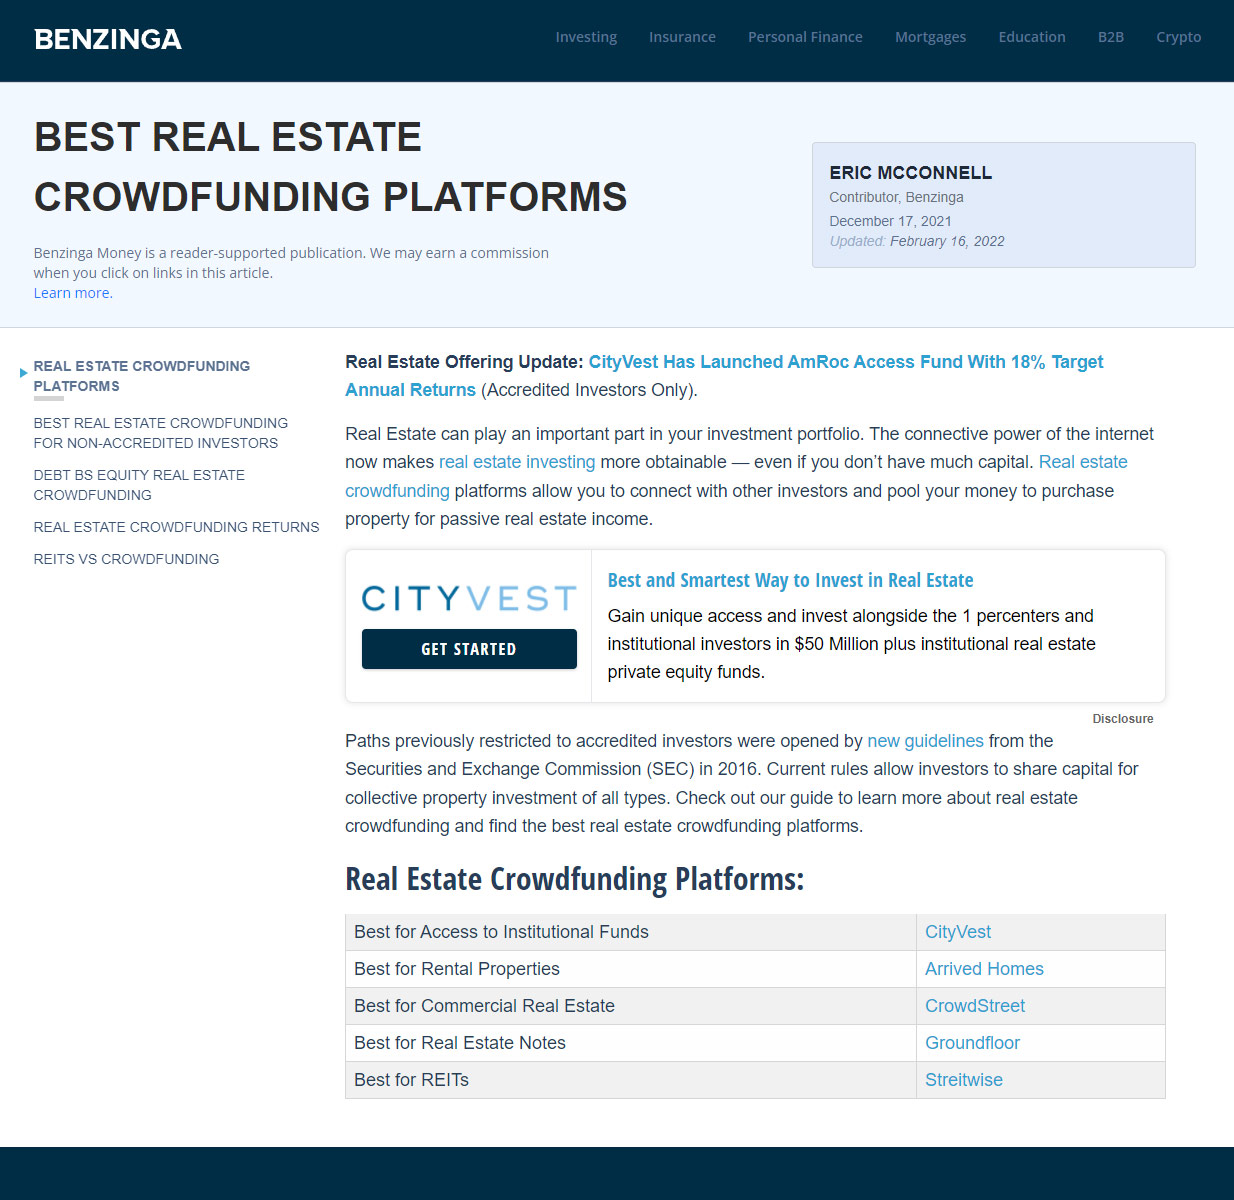 Benzinga Ranks CityVest #1 Real Estate Crowdfunding Platform for Institutional Funds